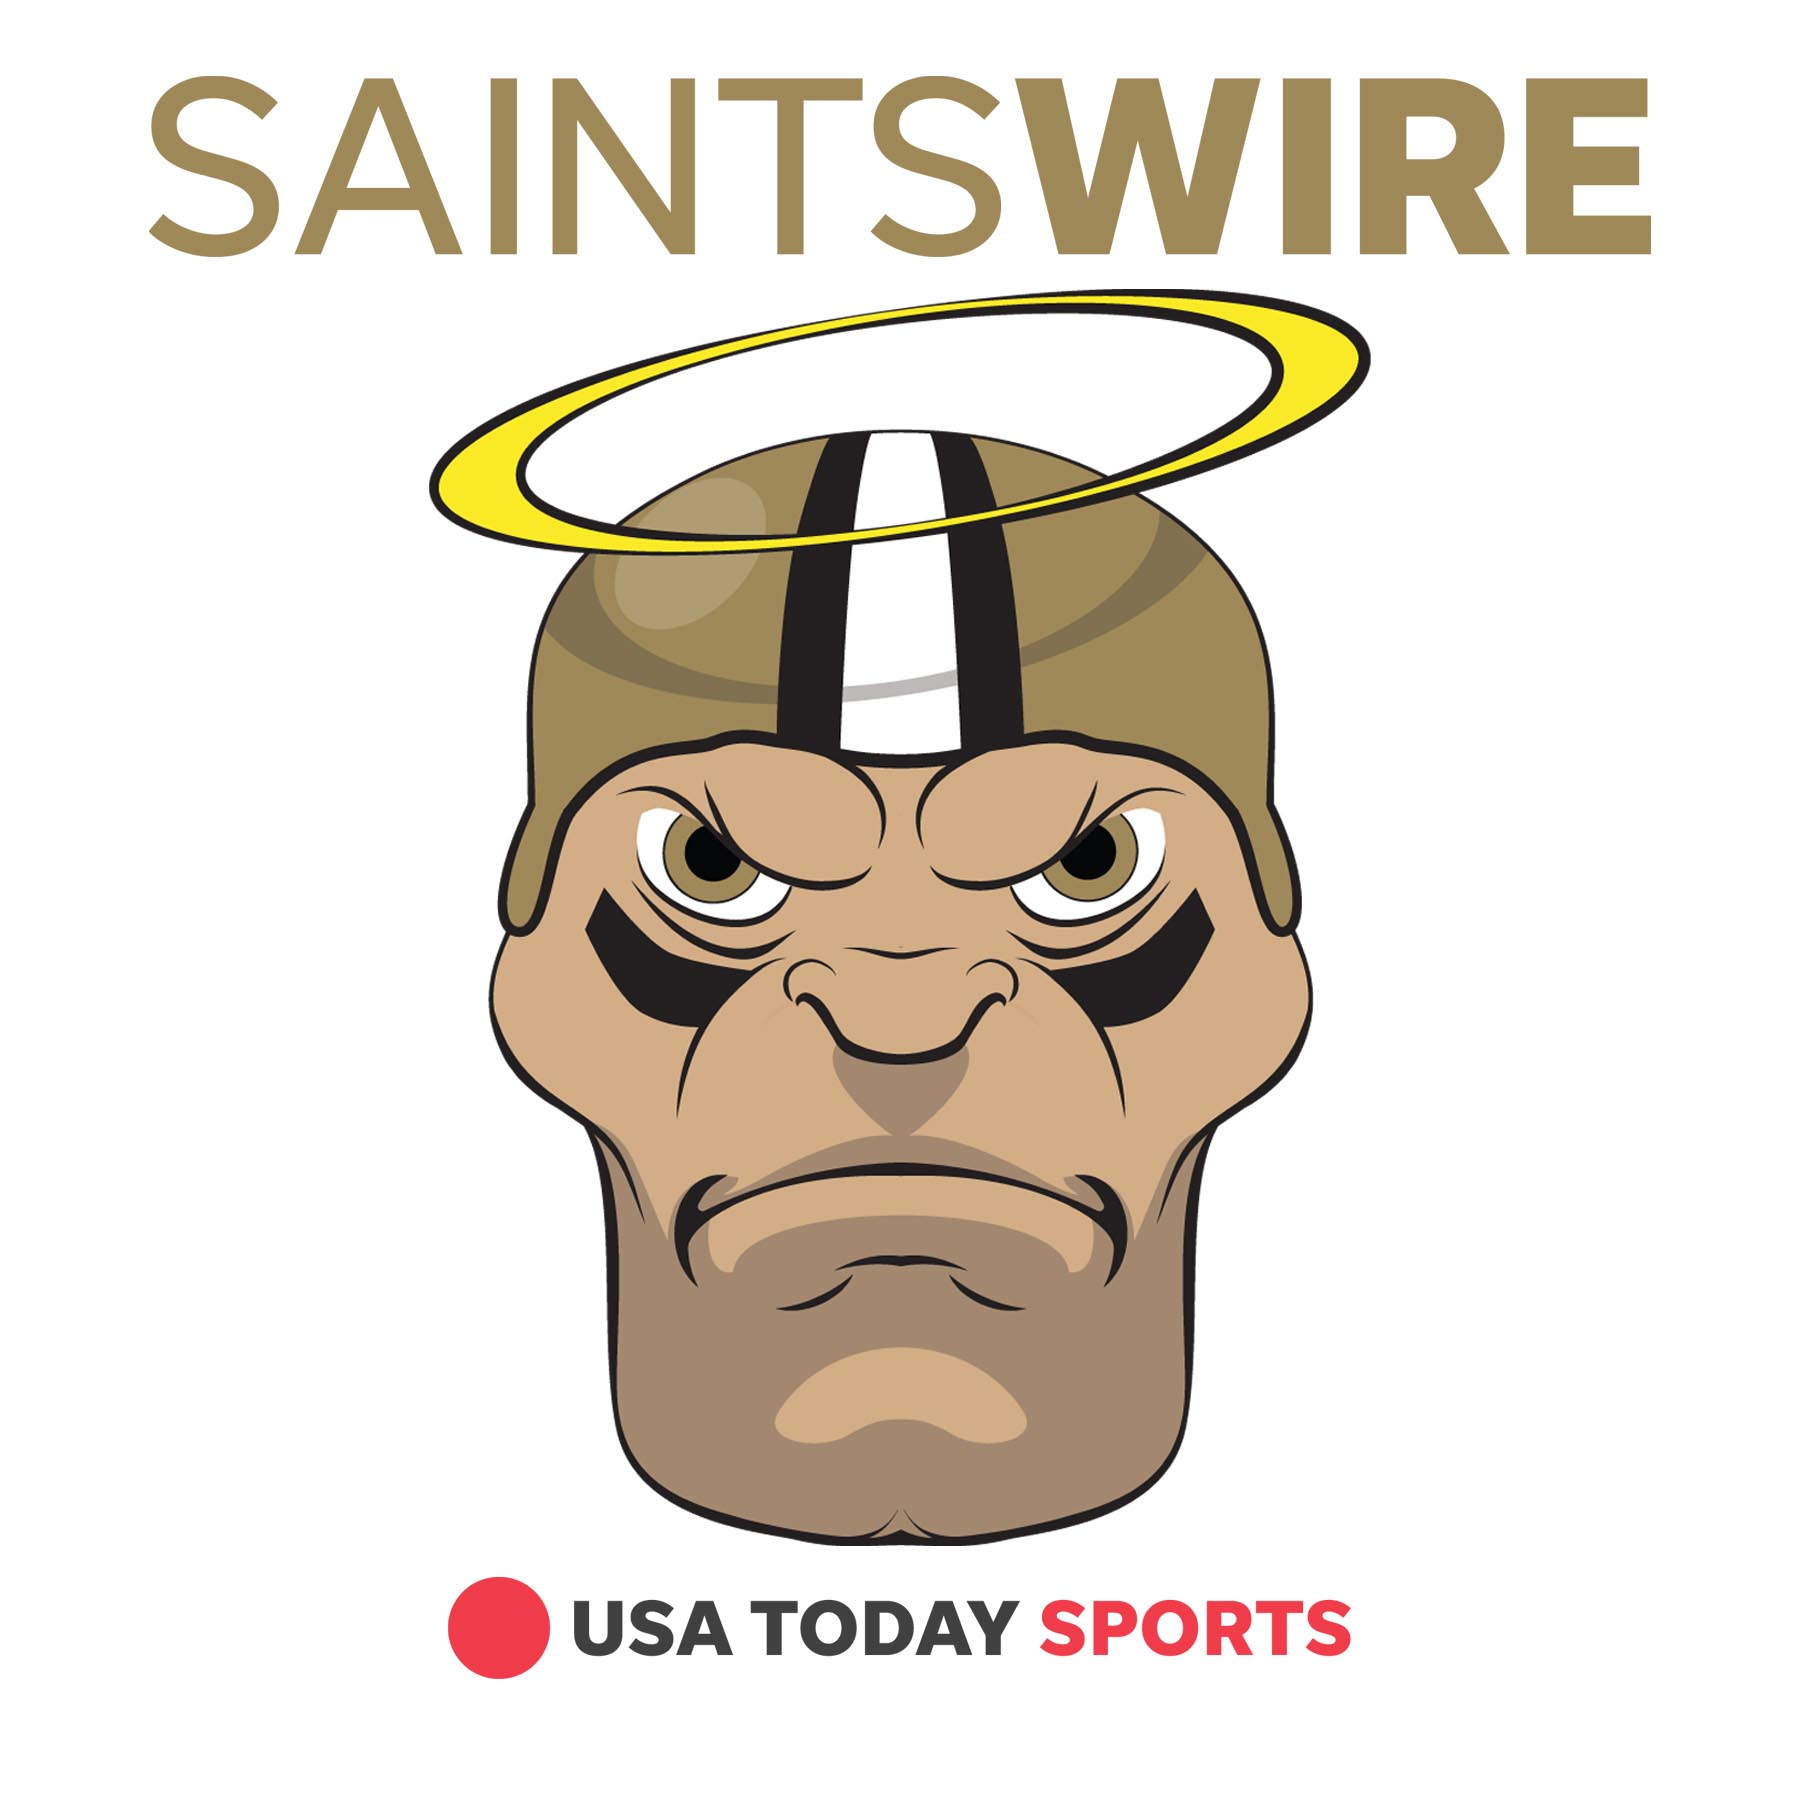 Should the Saints seek a Sean Payton return in 2023?